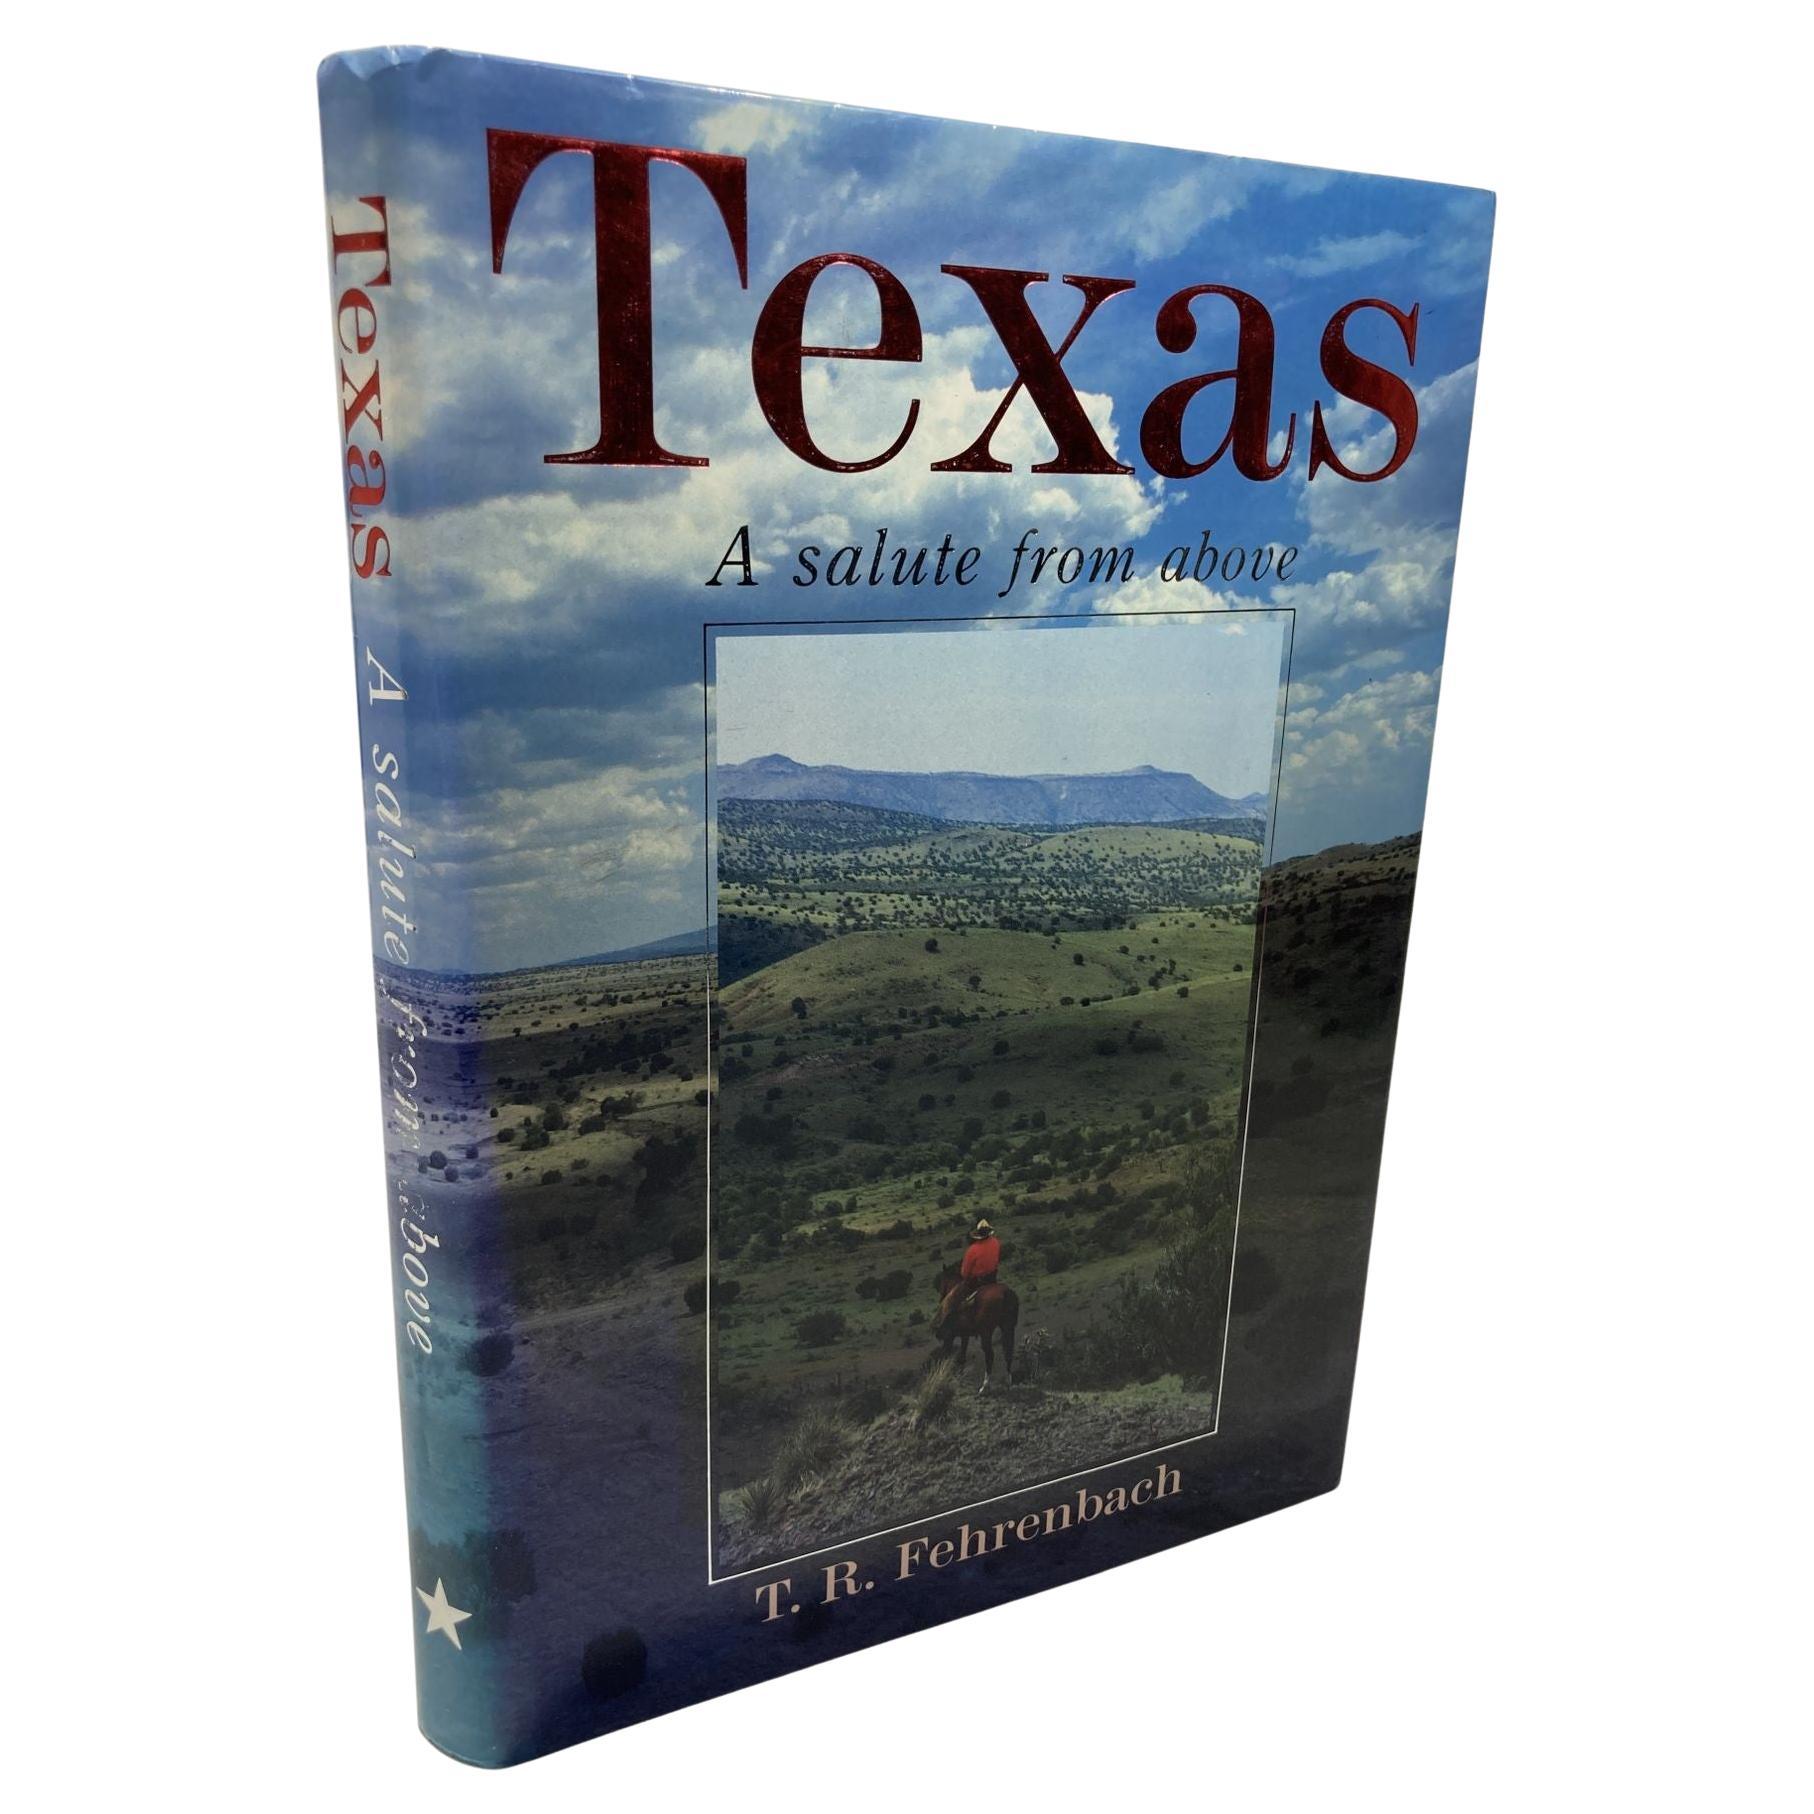 Texas a Salute from Above Fehrenbach, T. R. 1985